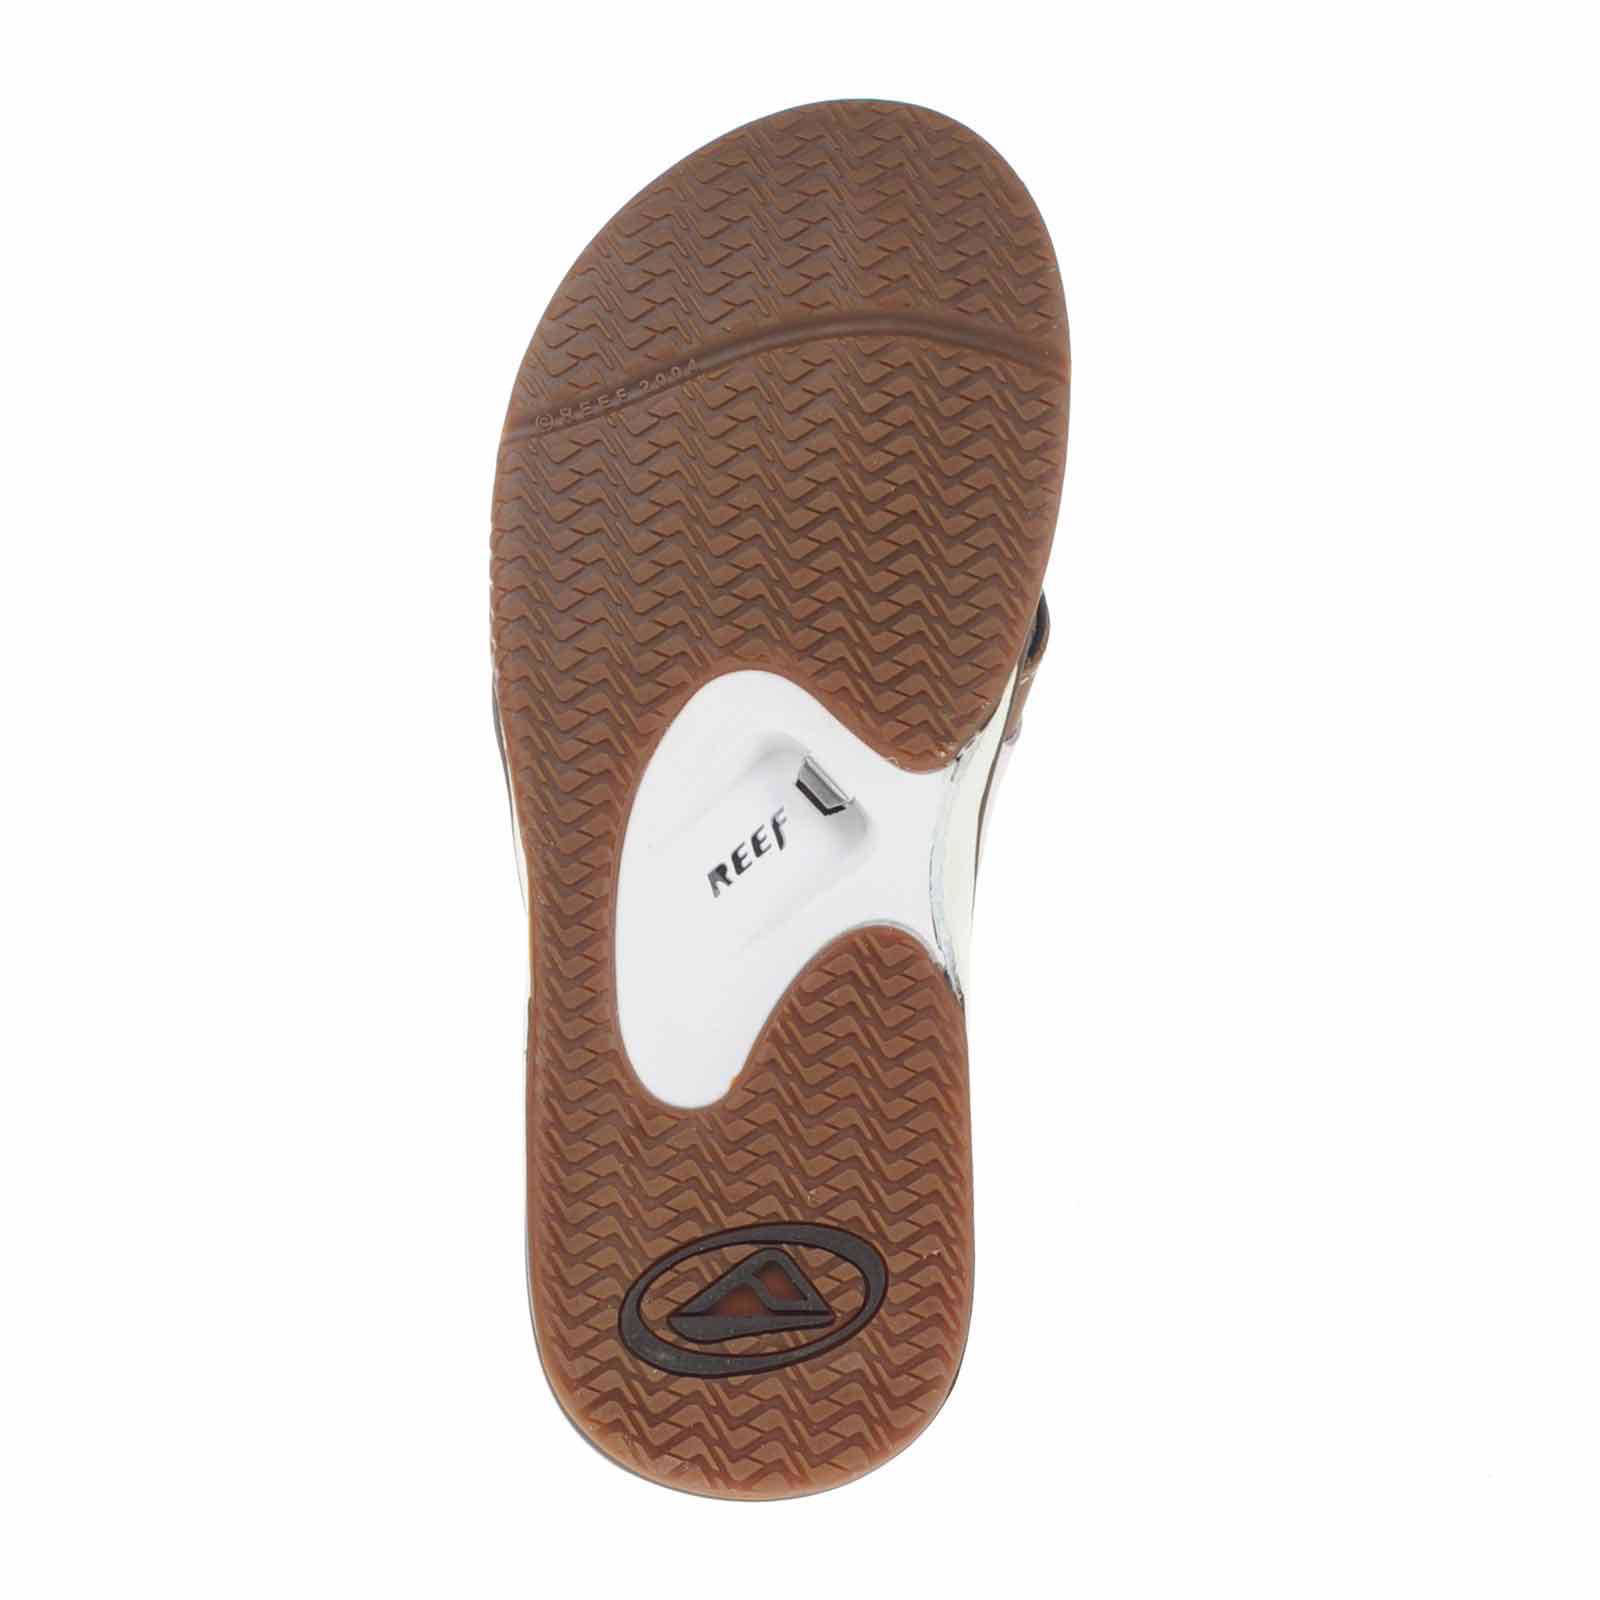 crocs isabella sandal bronze